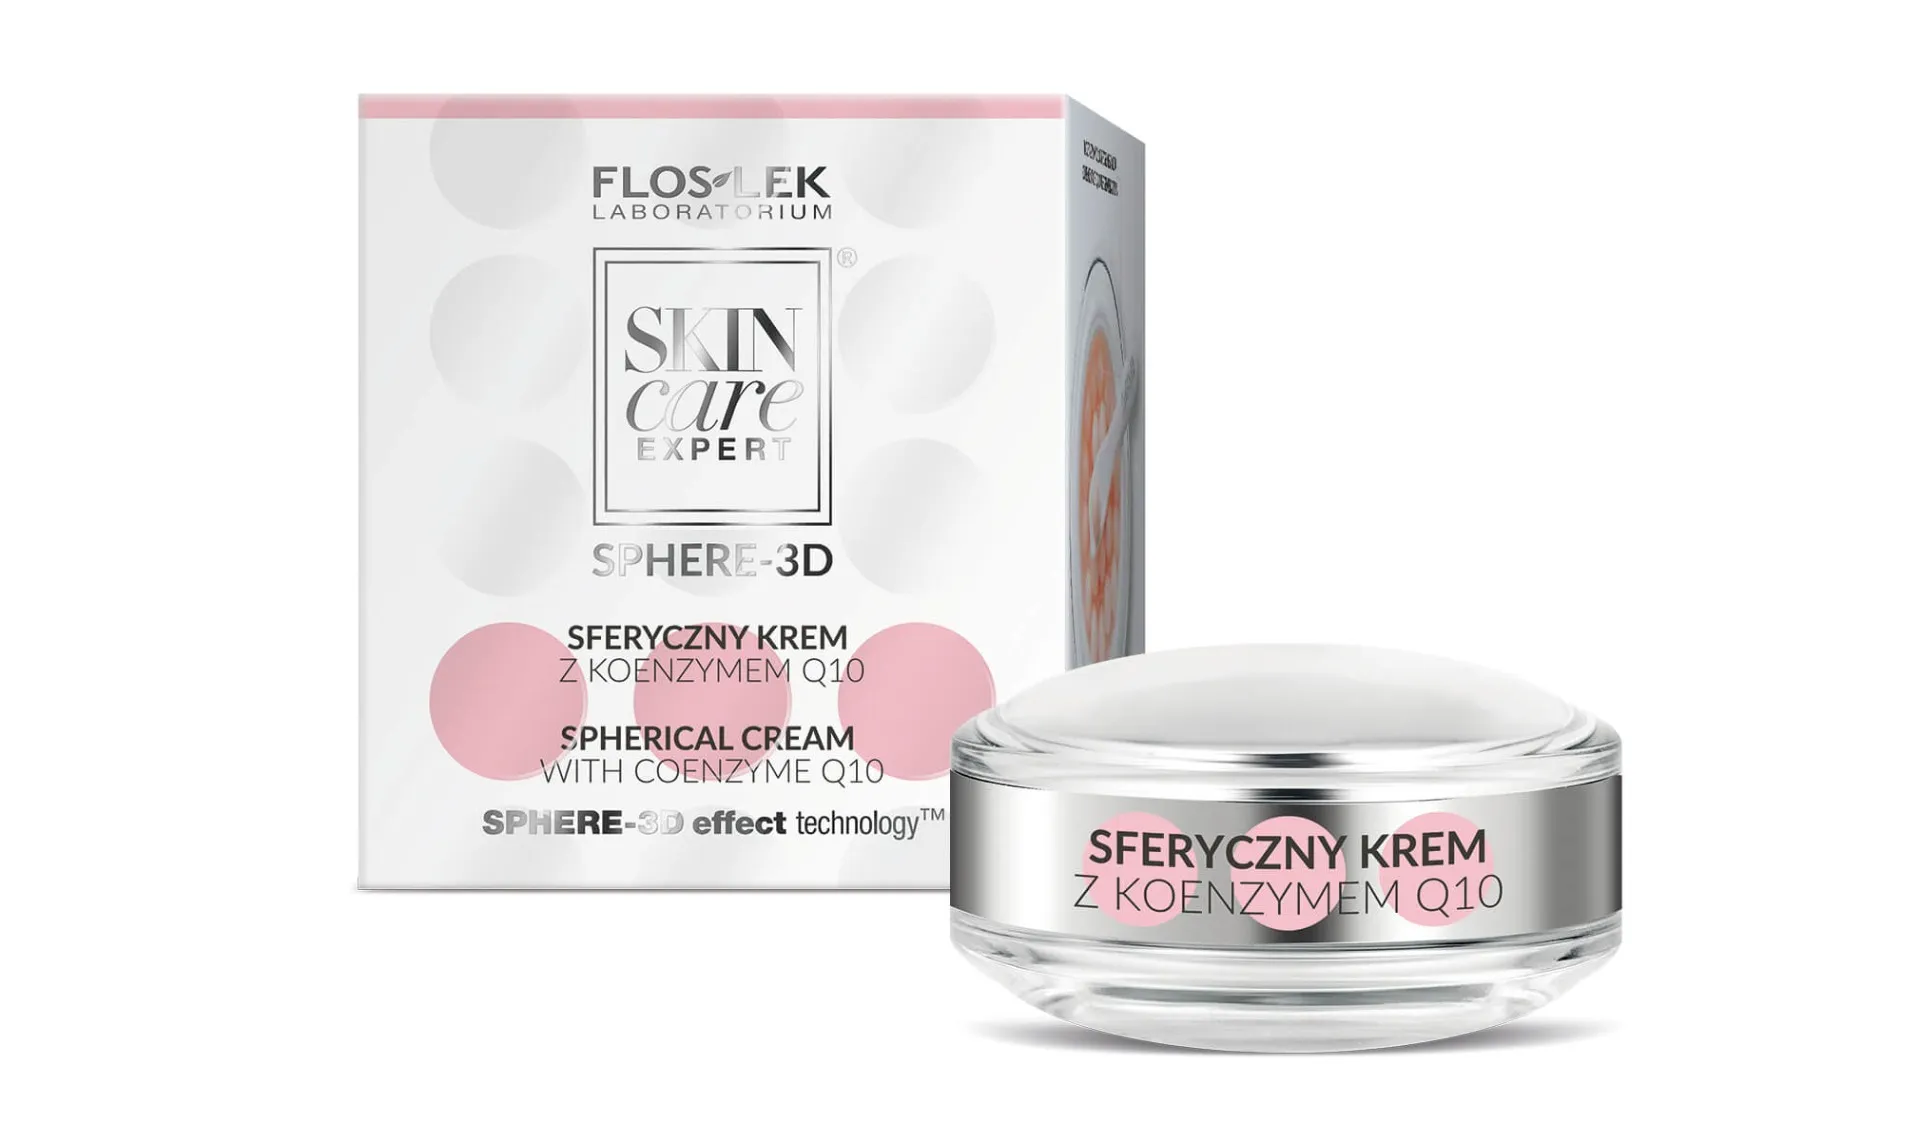 Flos-Lek Skin Care Expert Sphere 3D, sferyczny krem z koenzymem Q10, 11,5 g